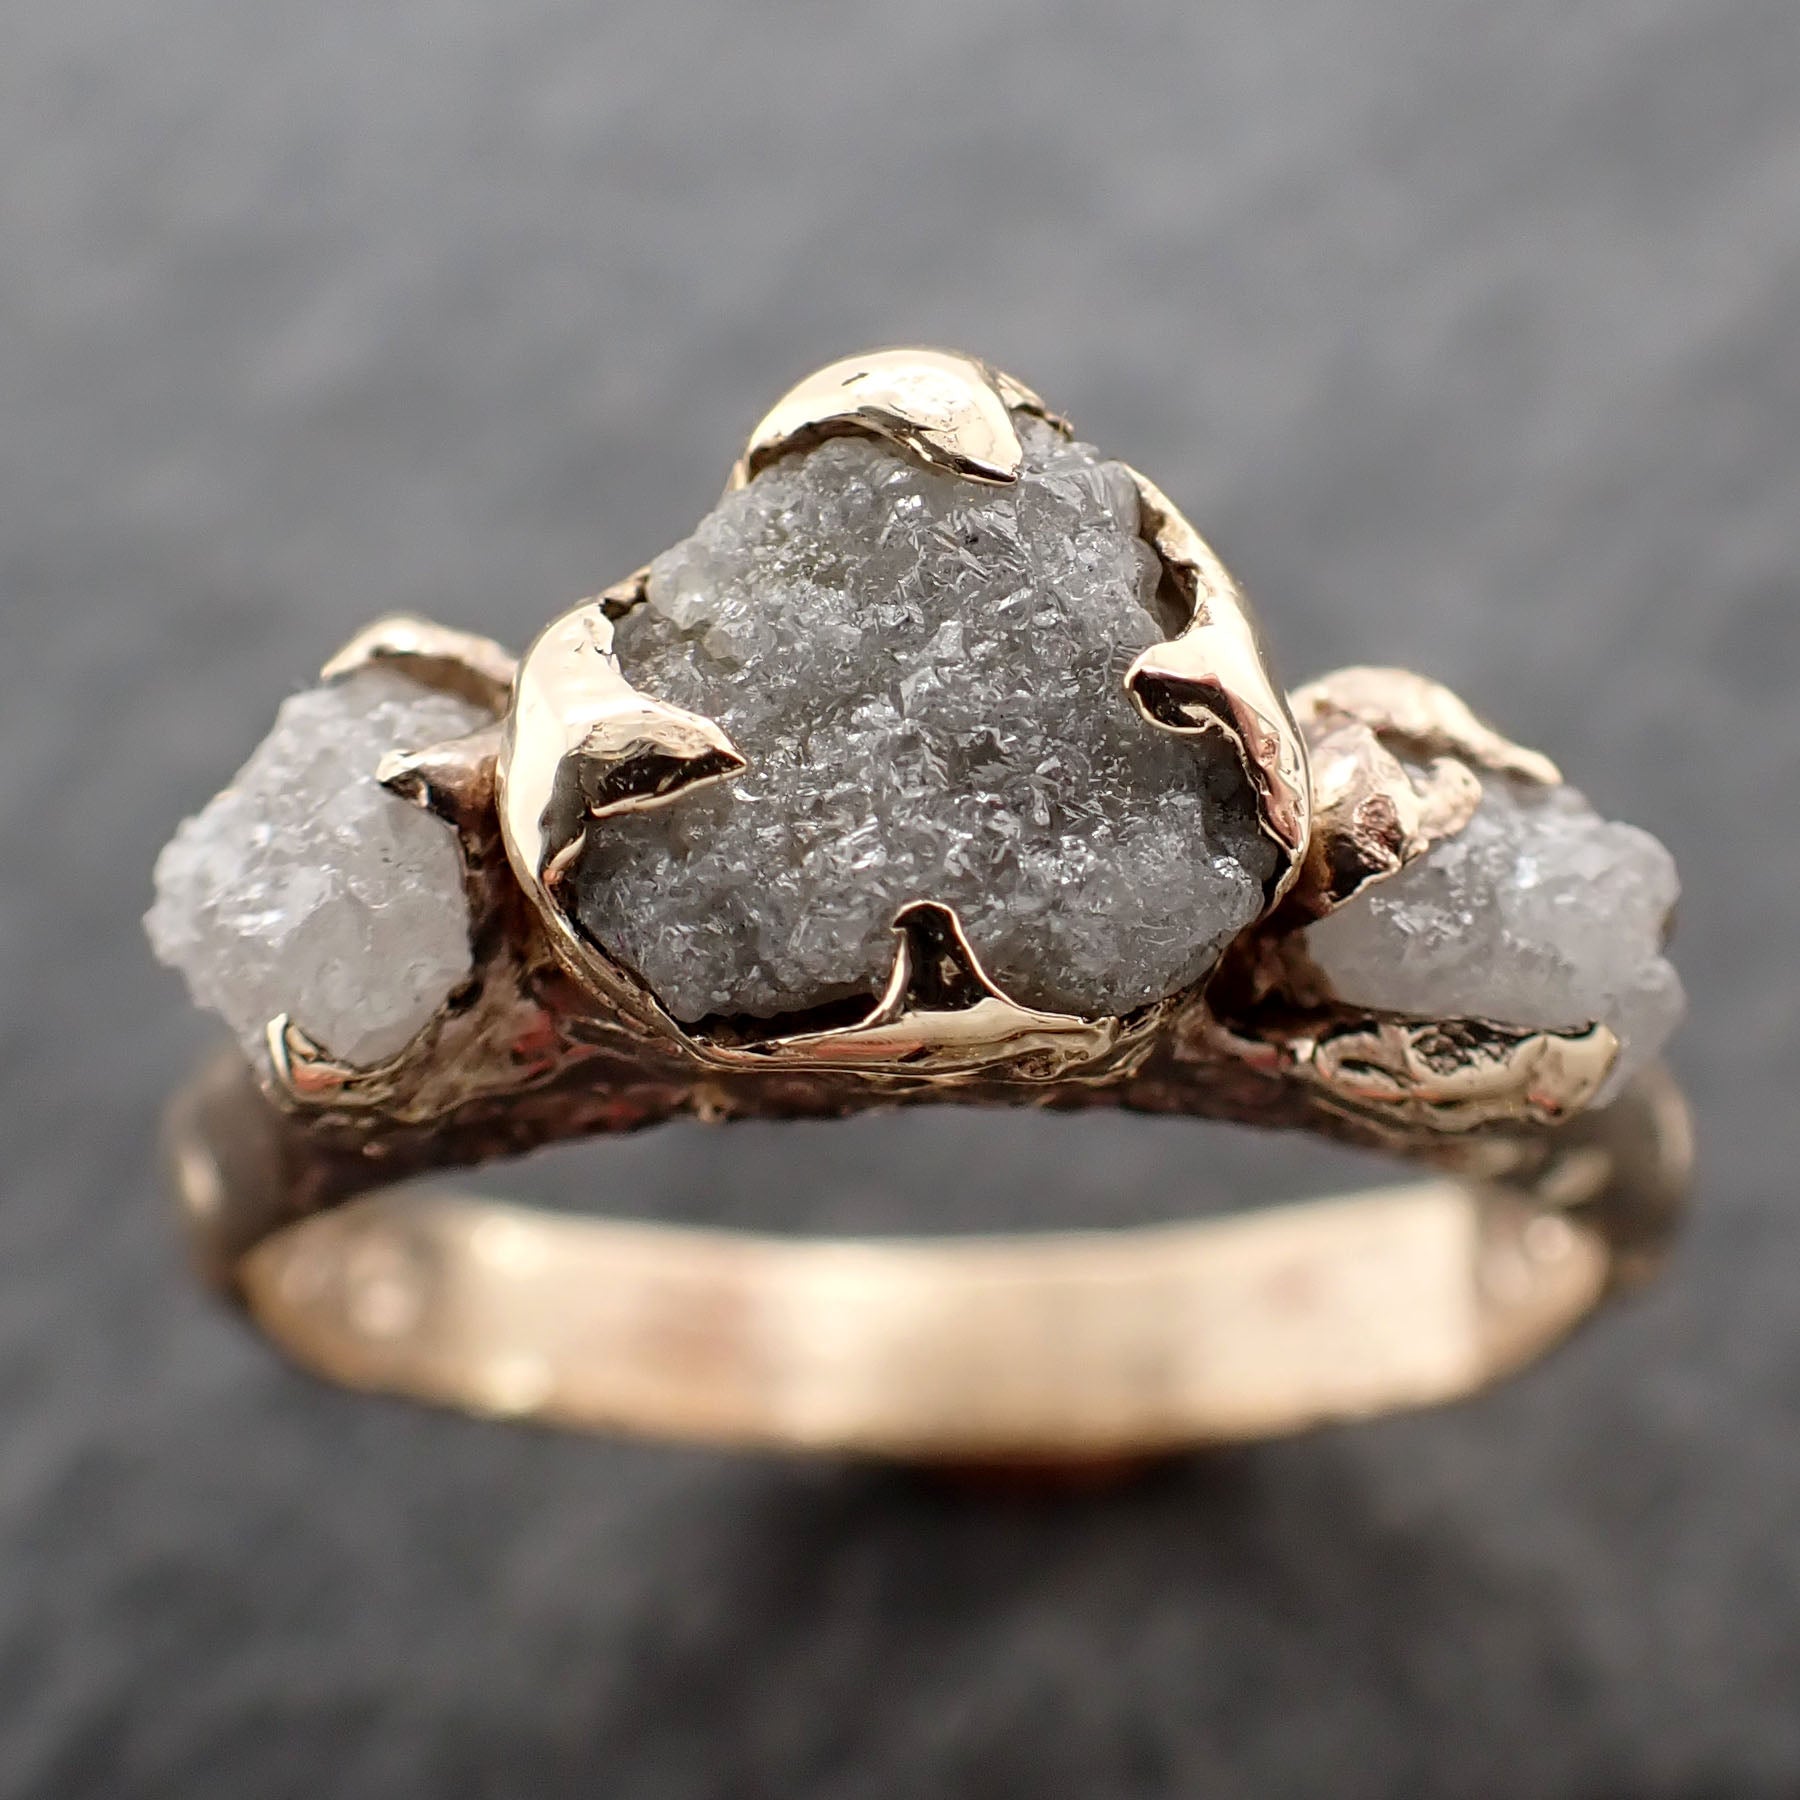 Raw Rough Diamond Engagement Stacking Multi stone Wedding anniversary 14k Gold Ring Rustic 2494